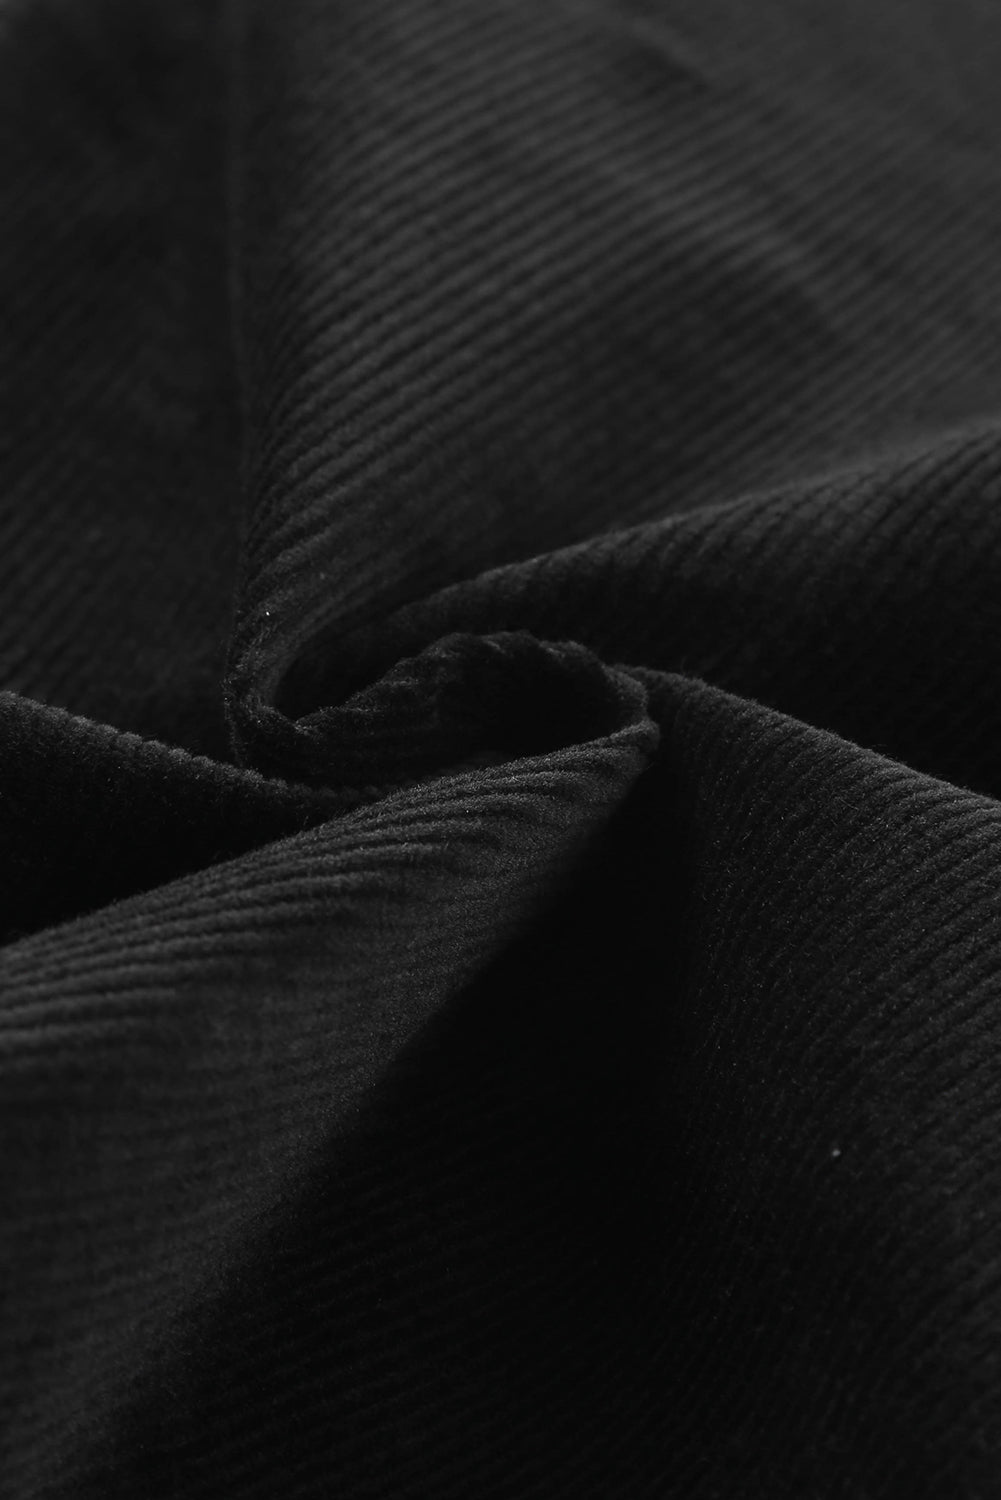 Black Sleeveless Buttoned Bodice Wide Leg Corduroy Jumpsuit